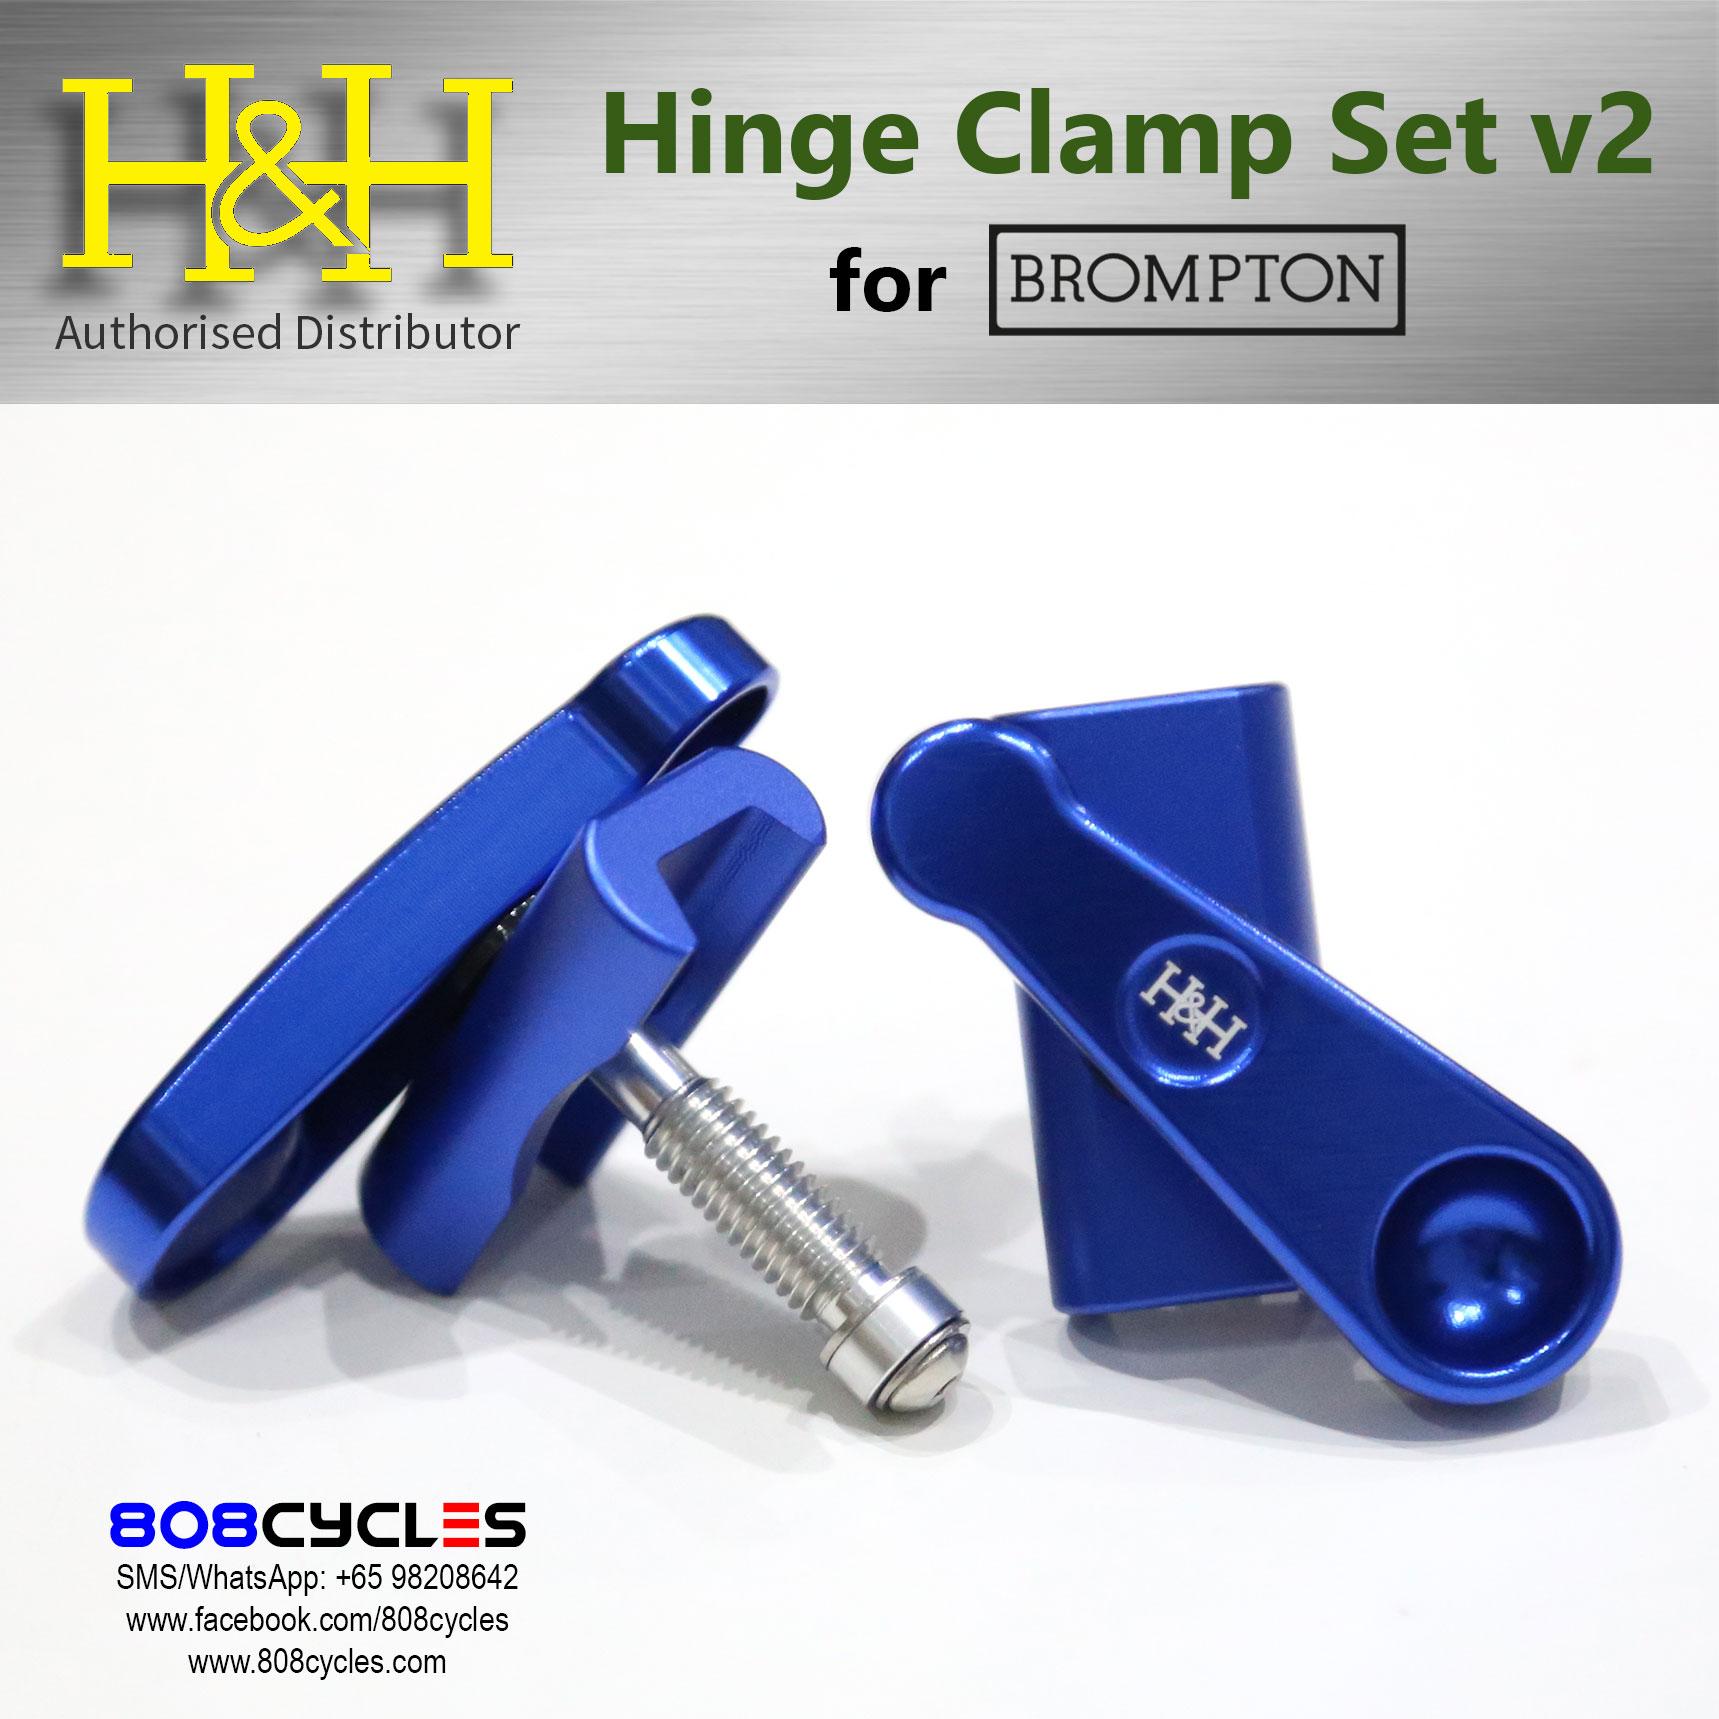 h&h hinge clamp